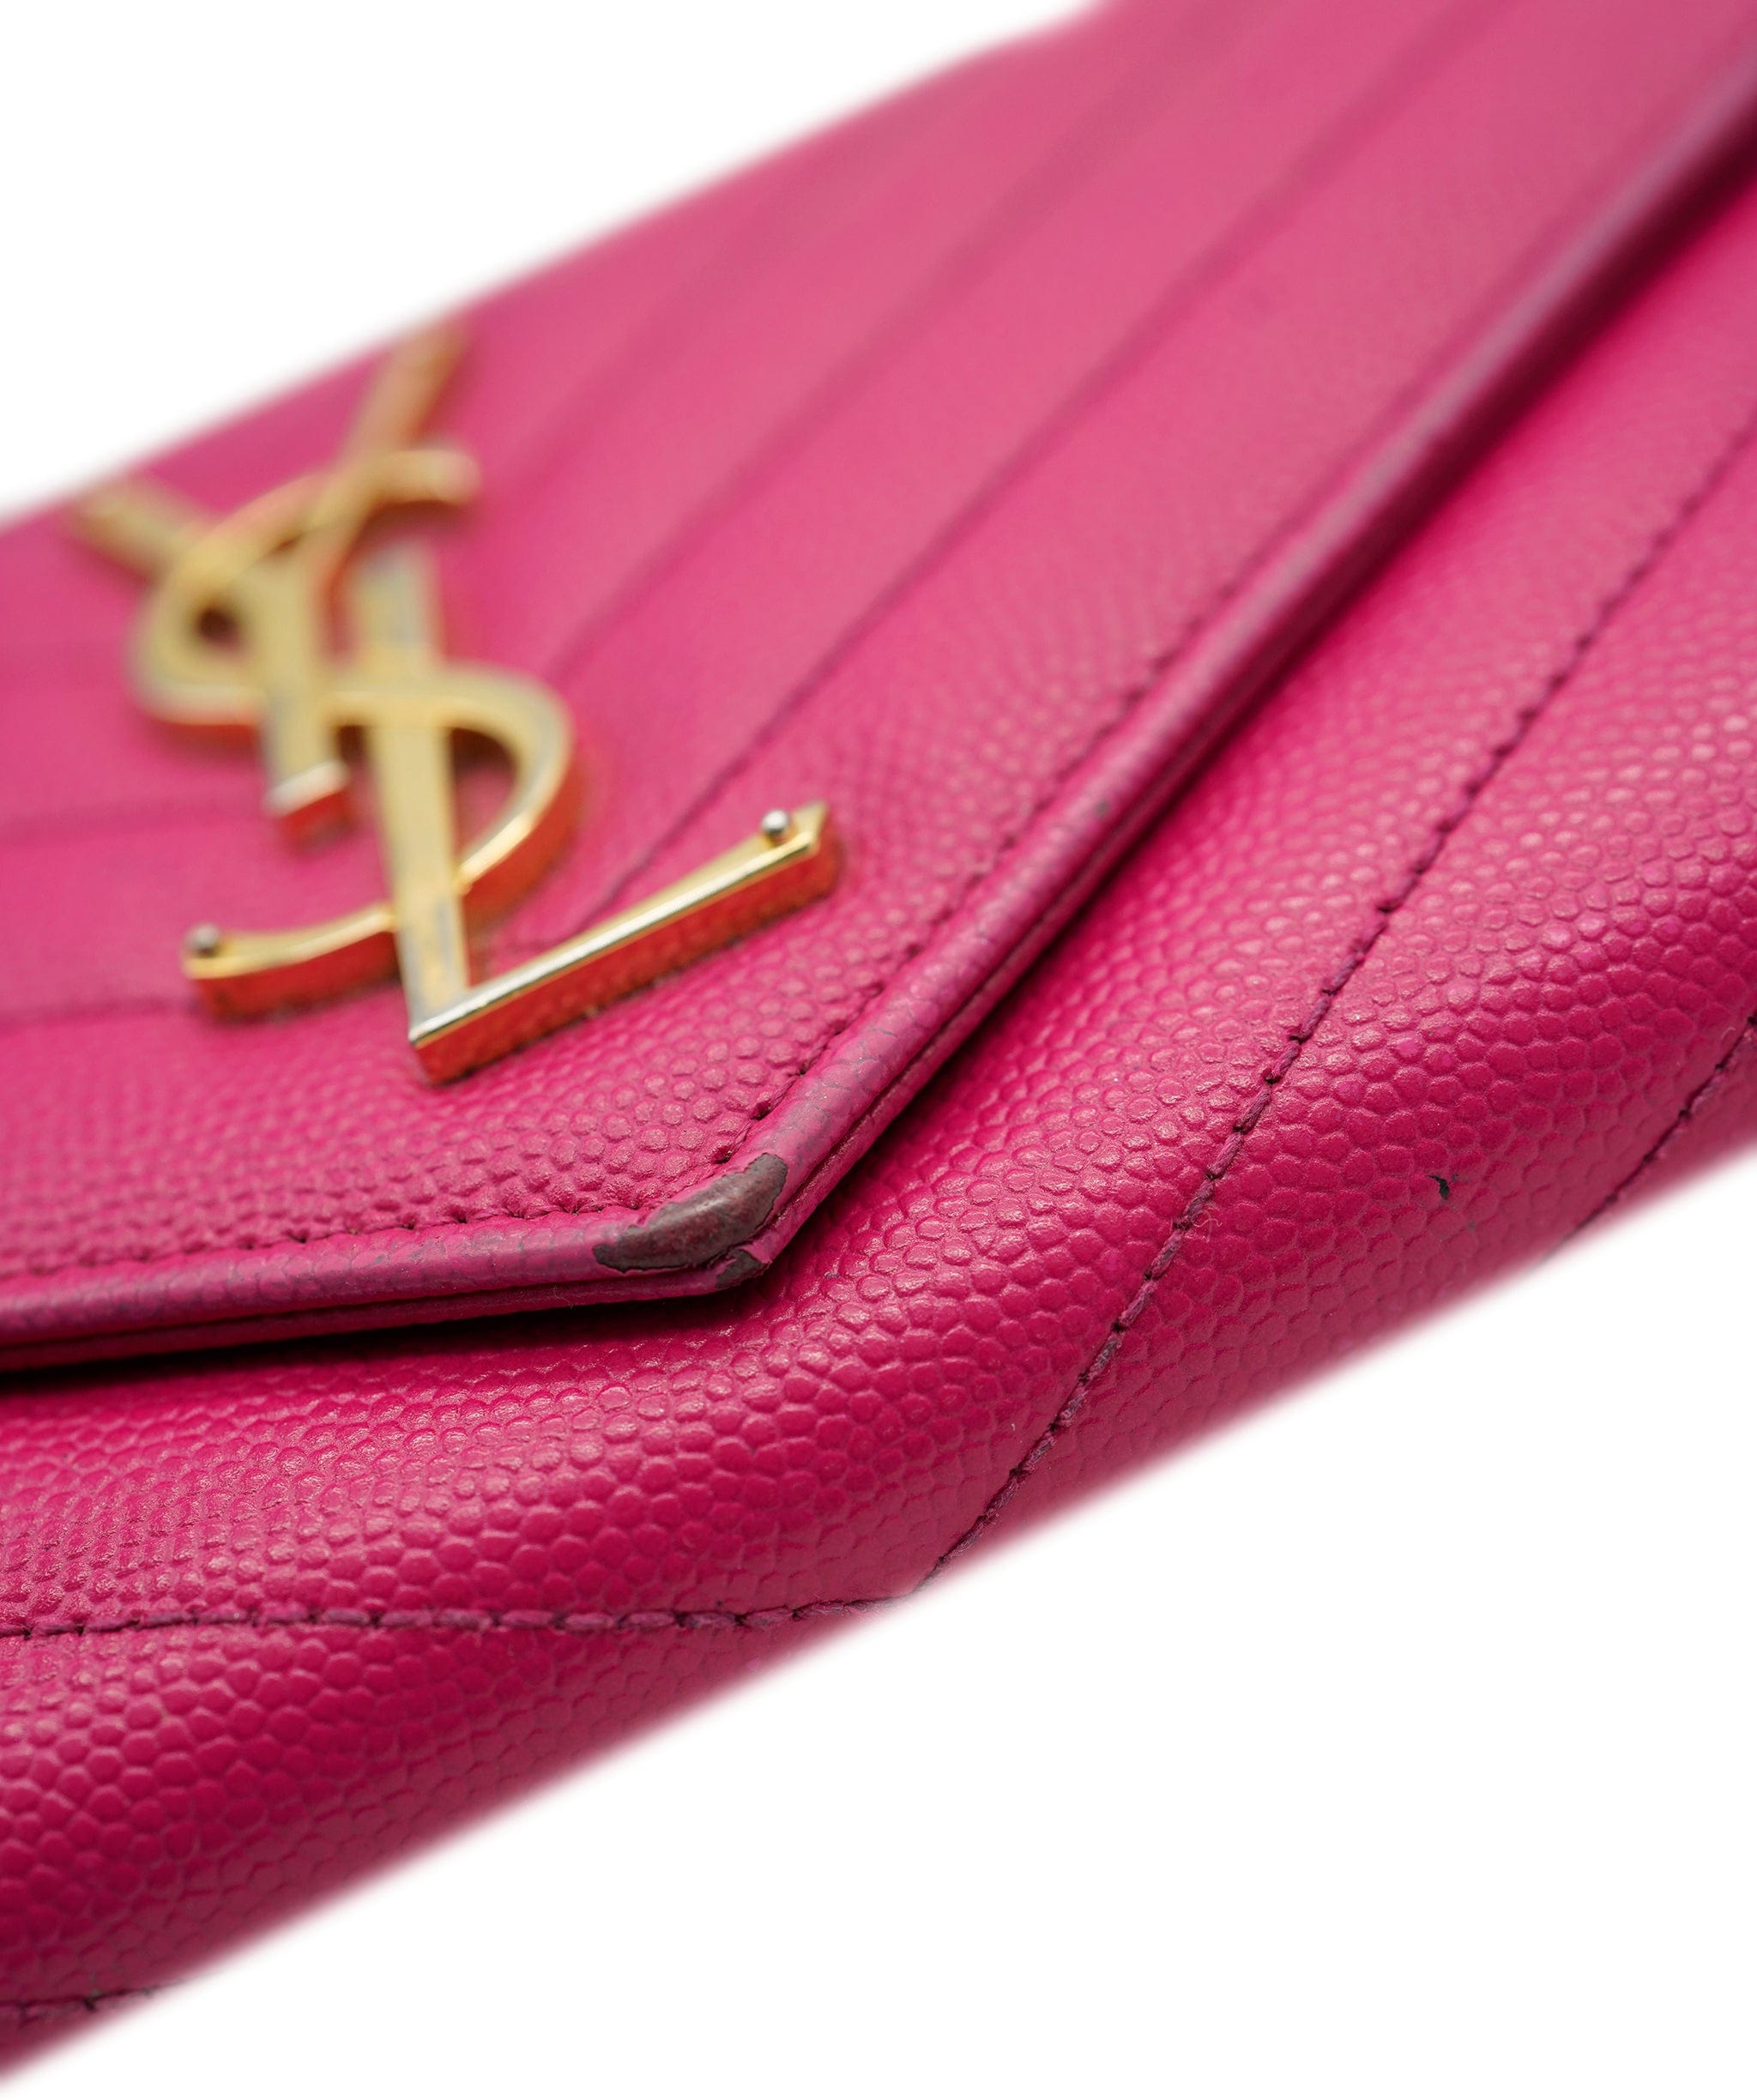 Yves Saint Laurent YSL hot pink chevron wallet  - AJC0457